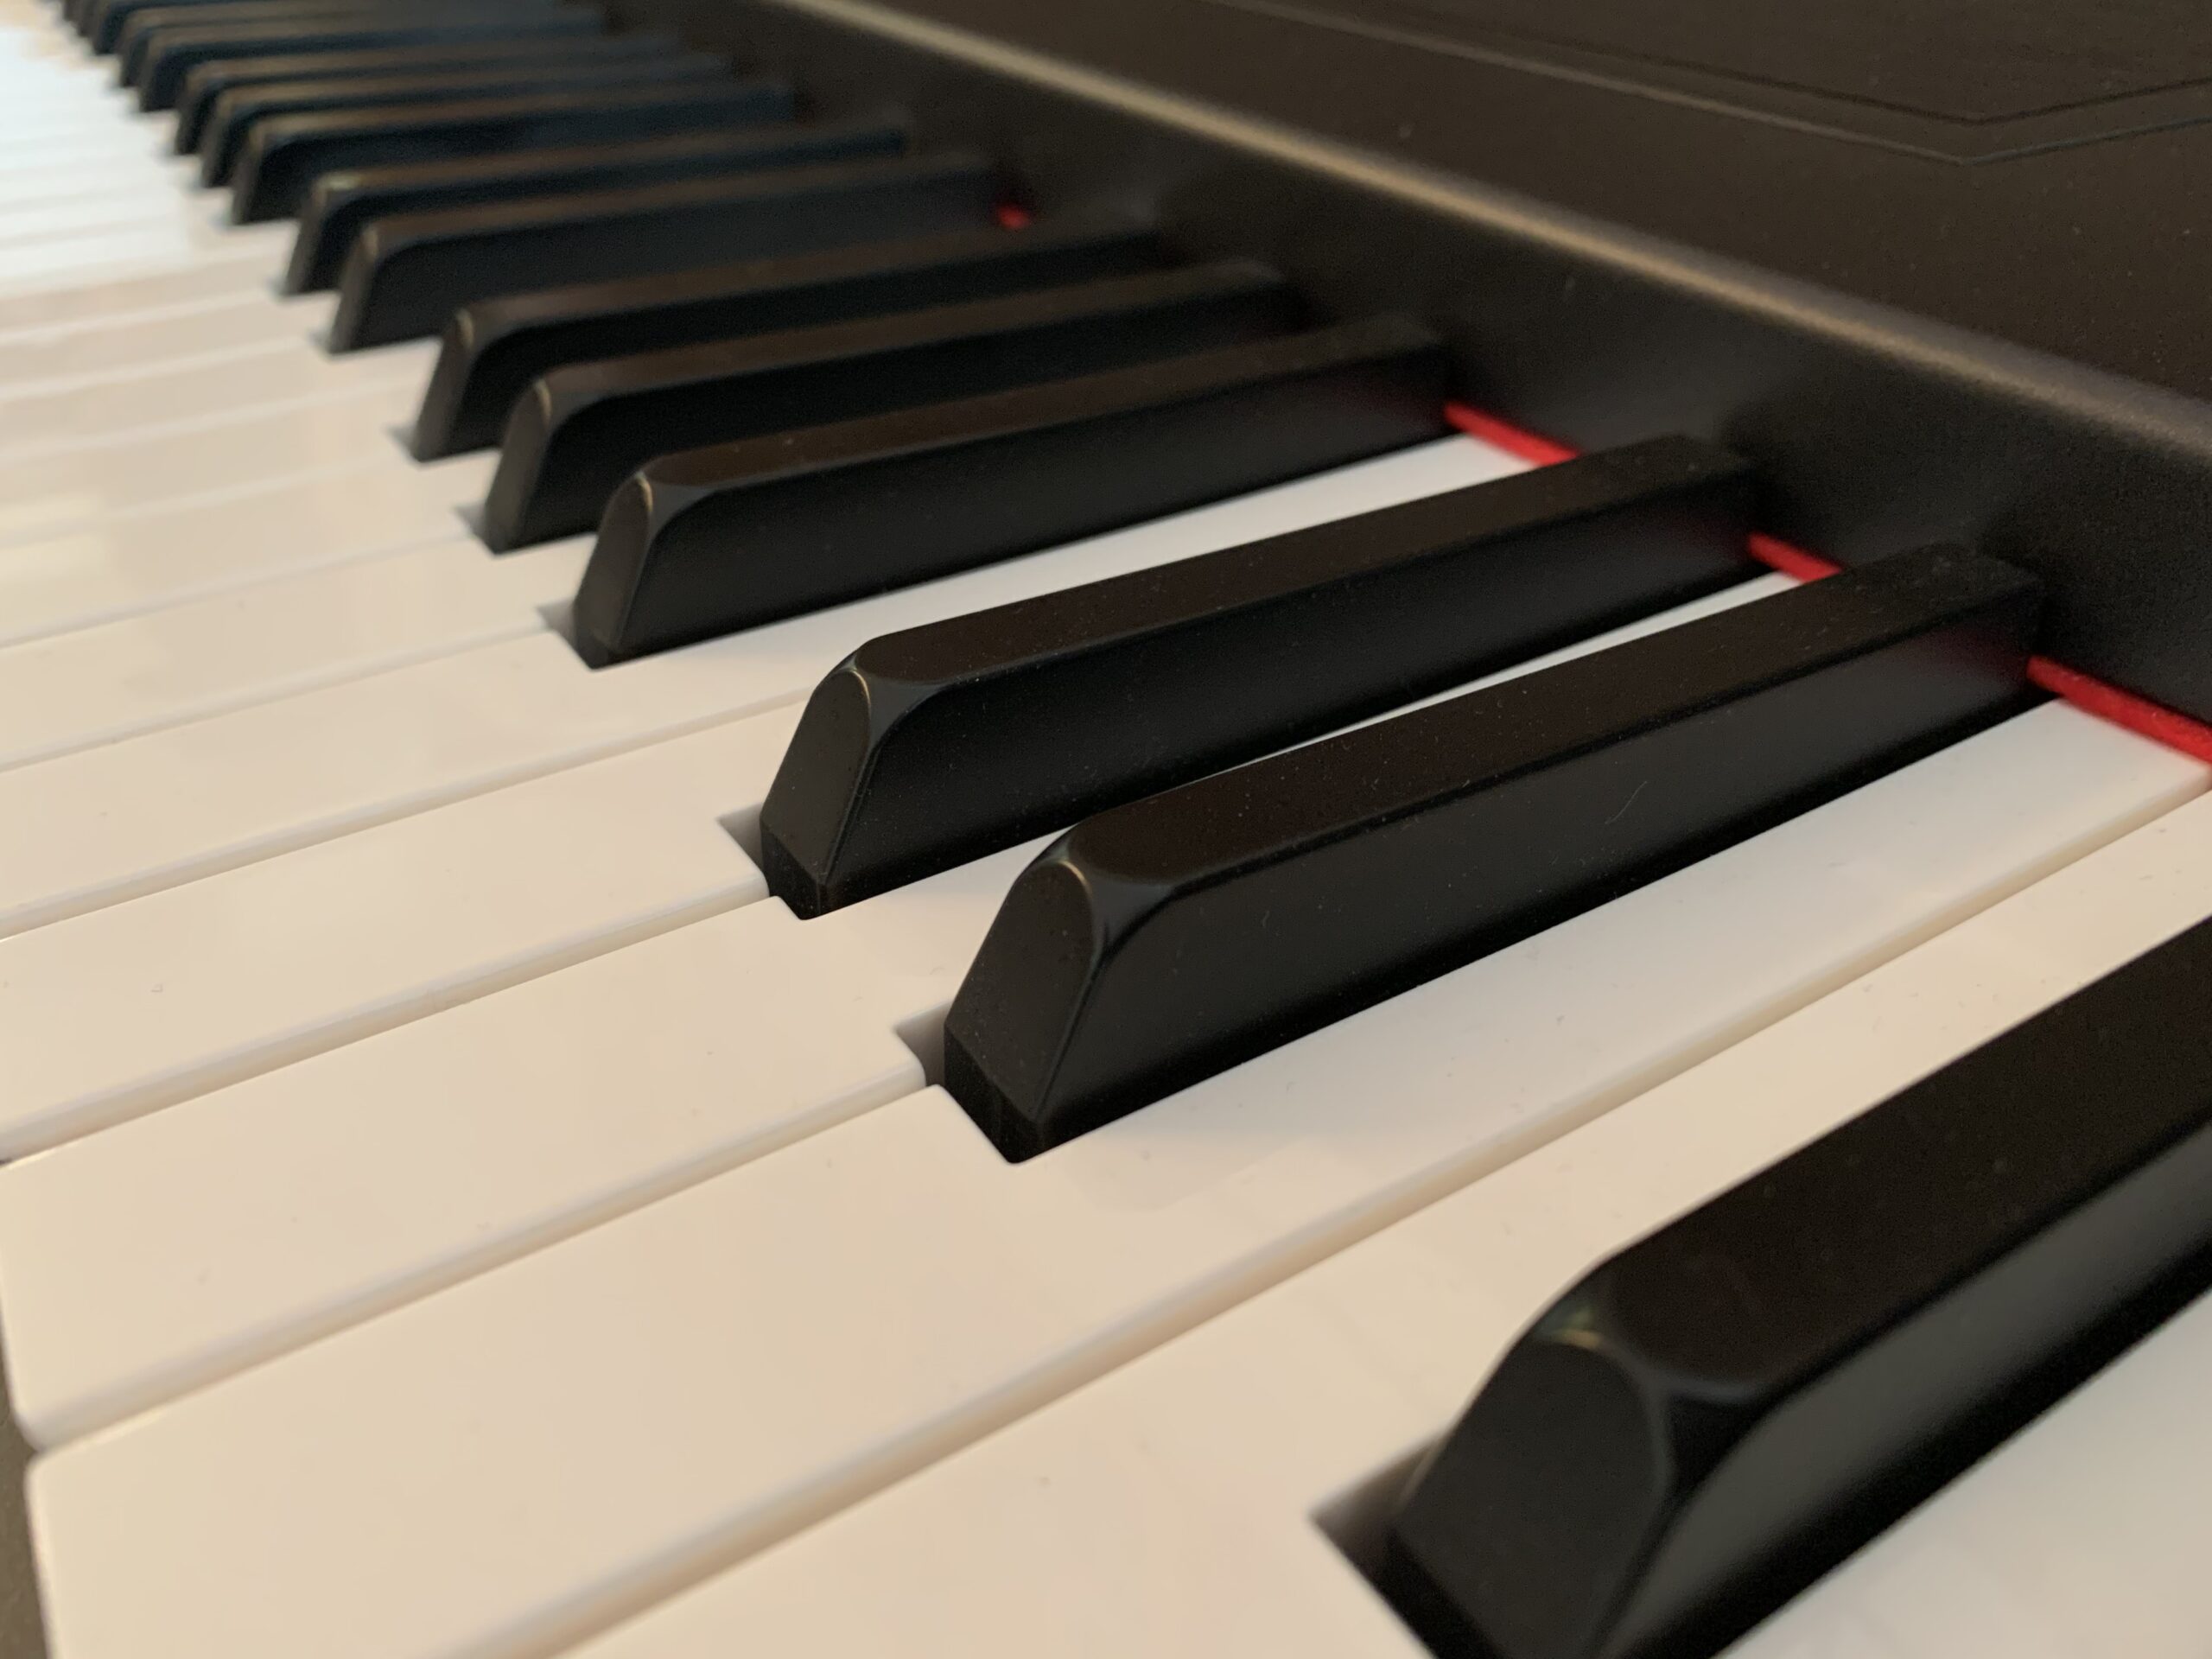 Yamaha P45 Digital Piano Review UK